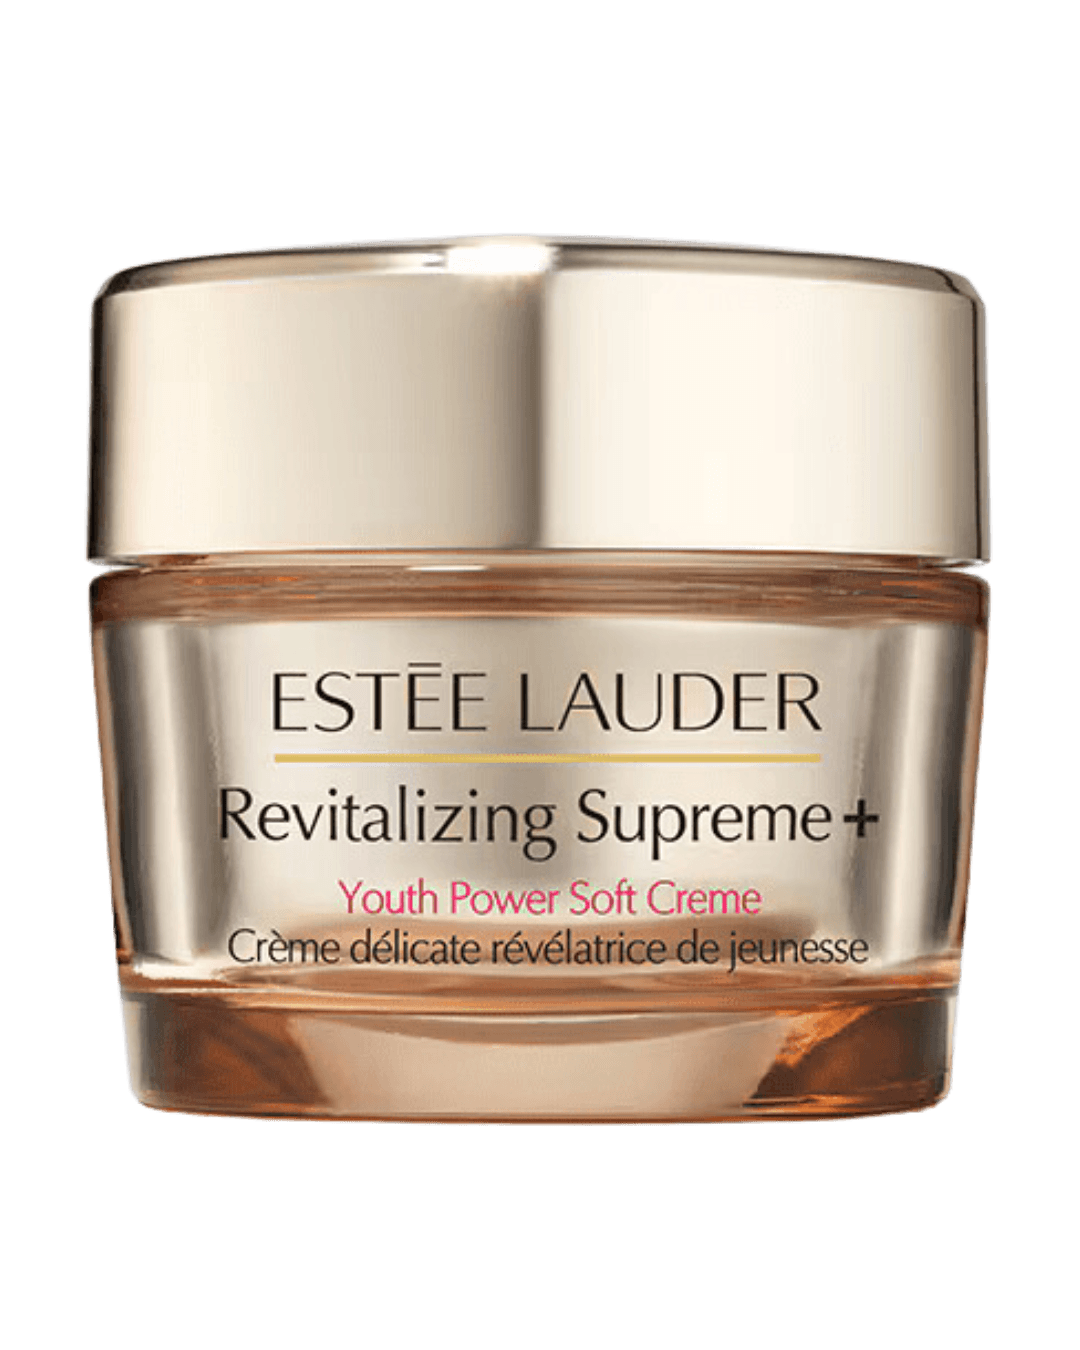 Estée Lauder Revitalizing Supreme+ Youth Power Soft Creme Moisturizer